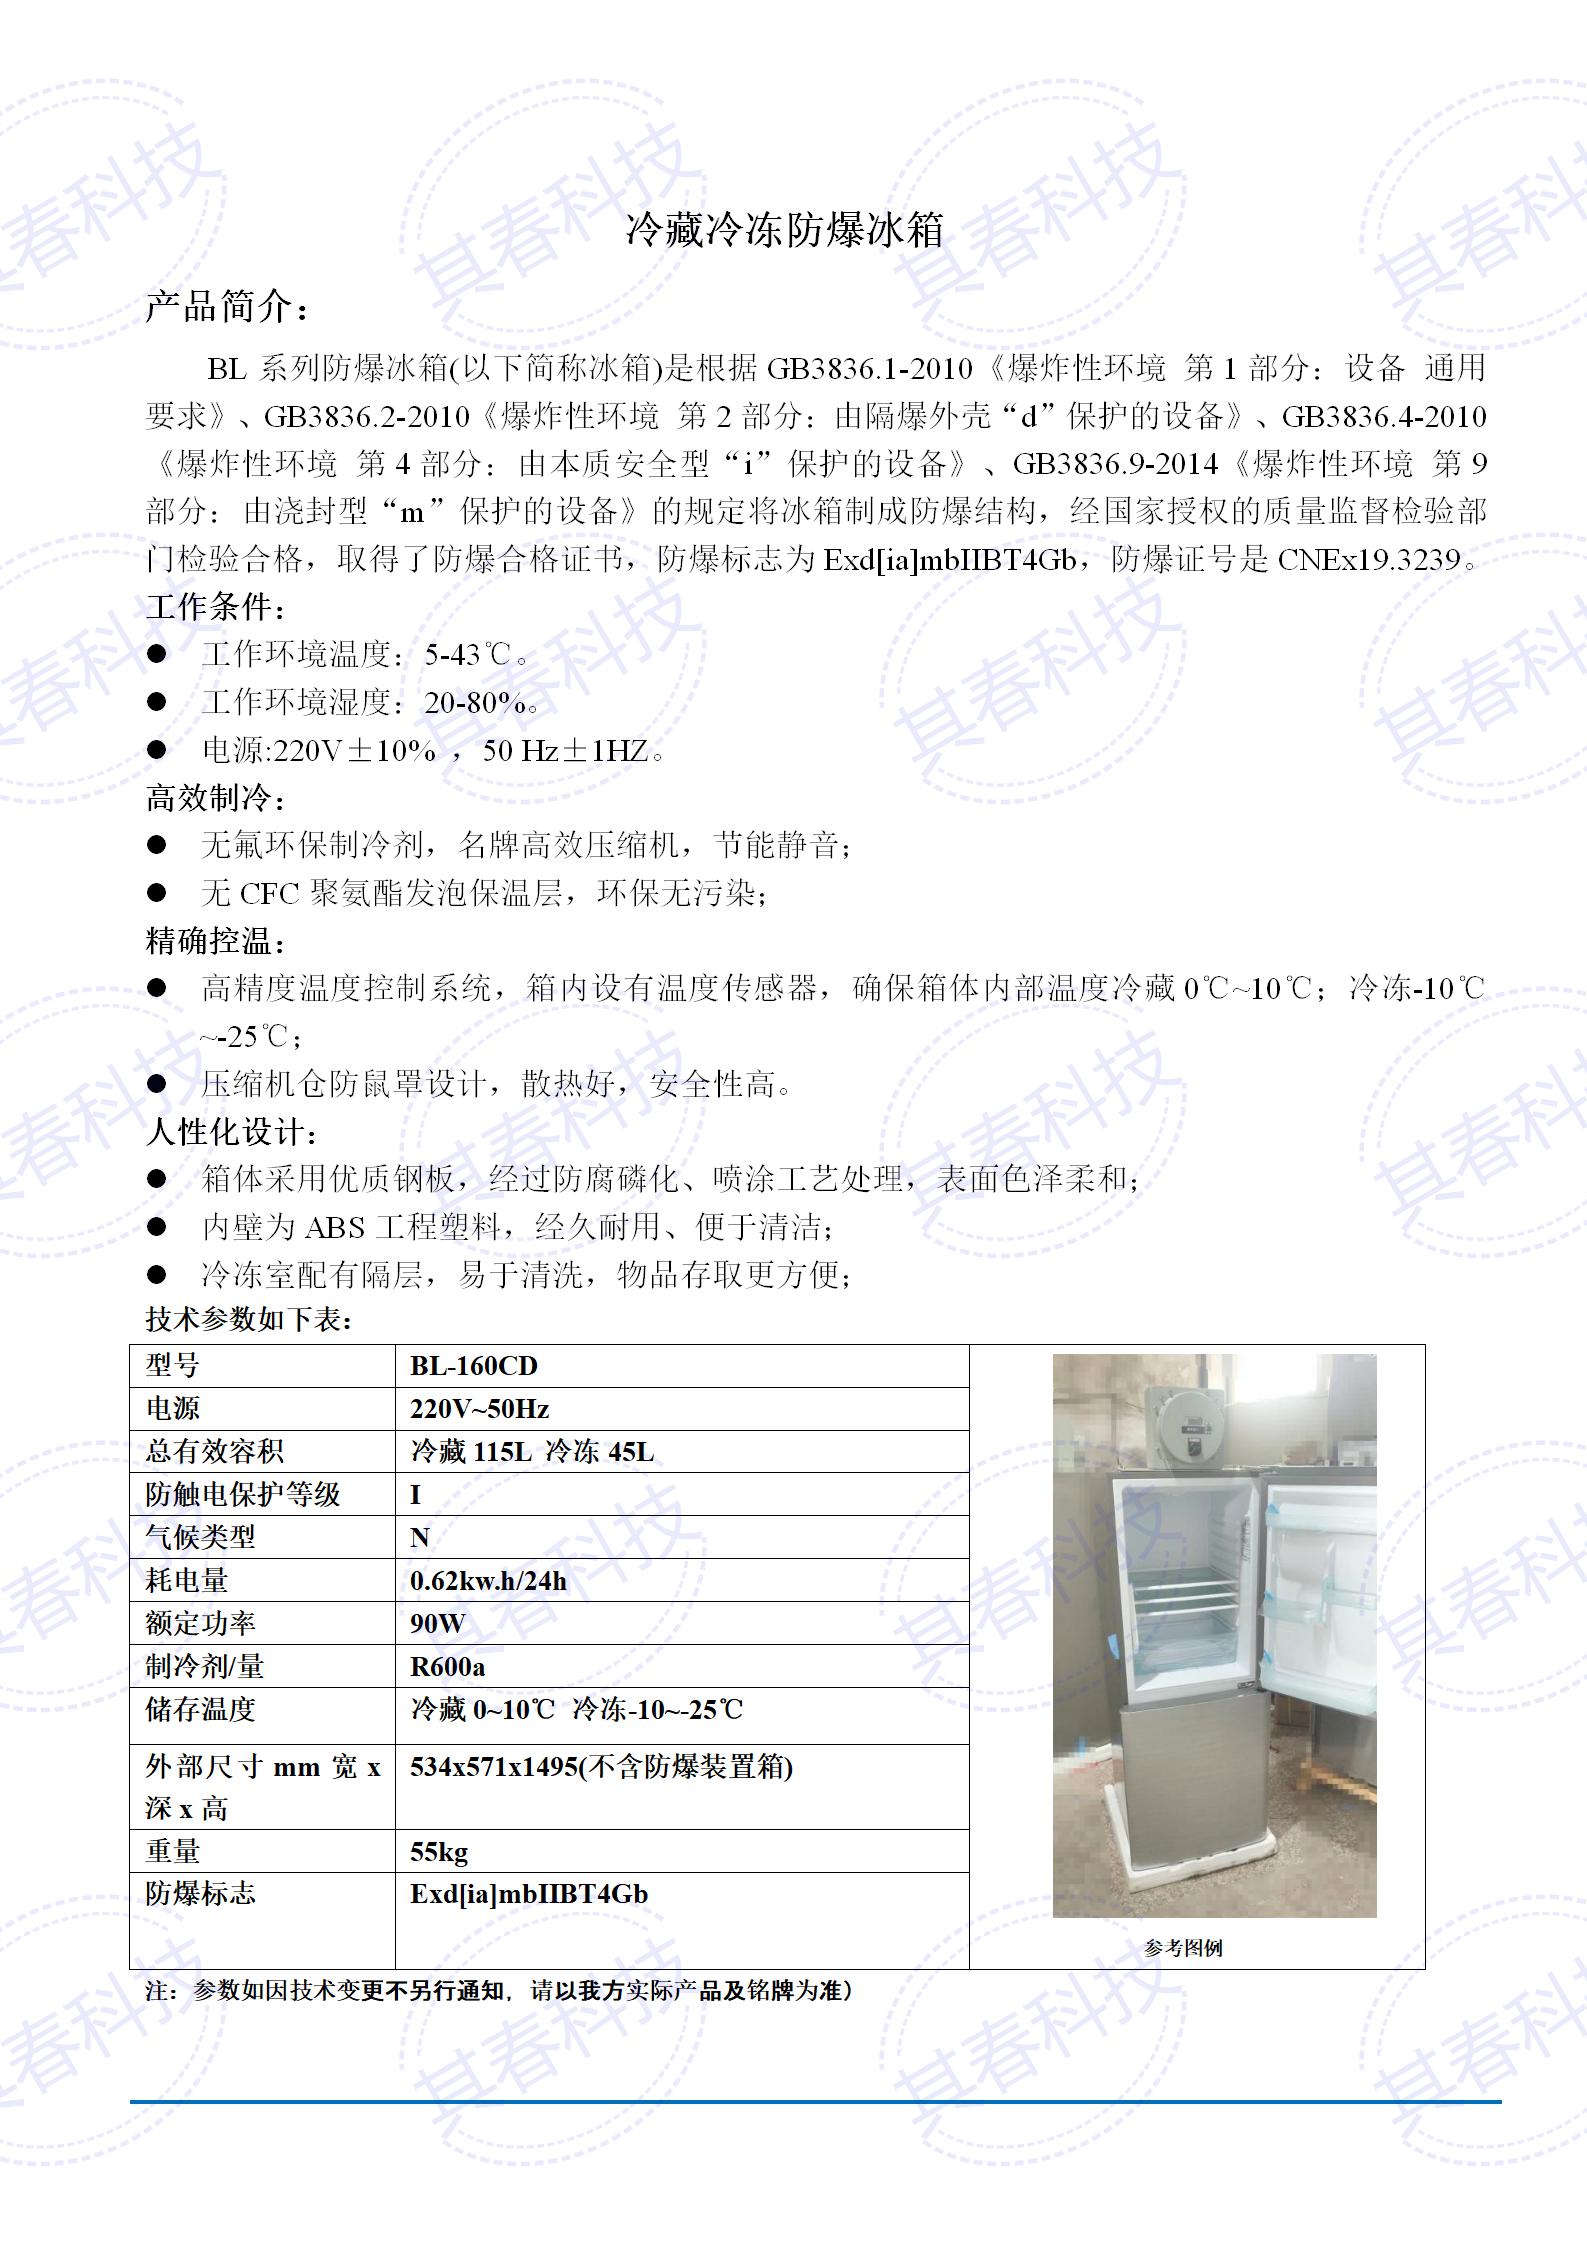 BL-160CD冷藏冷冻防爆冰箱技术参数资料_01.jpg